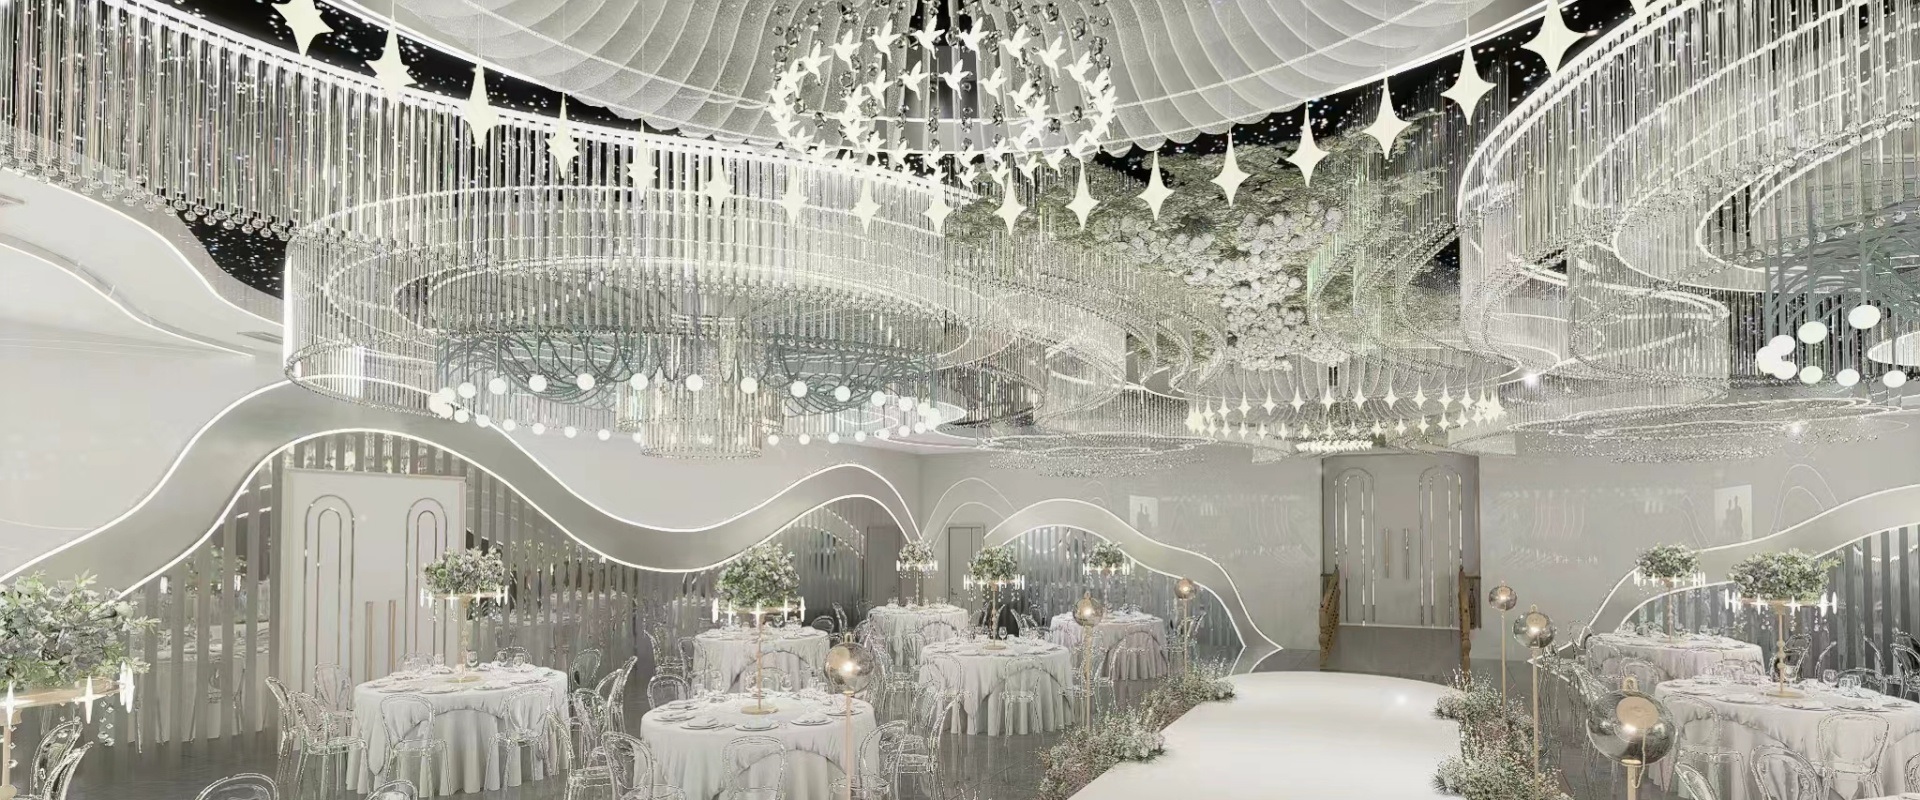 Dutti LED Non-standard Modern Chandelier Large Crystal Ceiling Pendant Lighting OEM ODM for Wedding Ballroom Canada